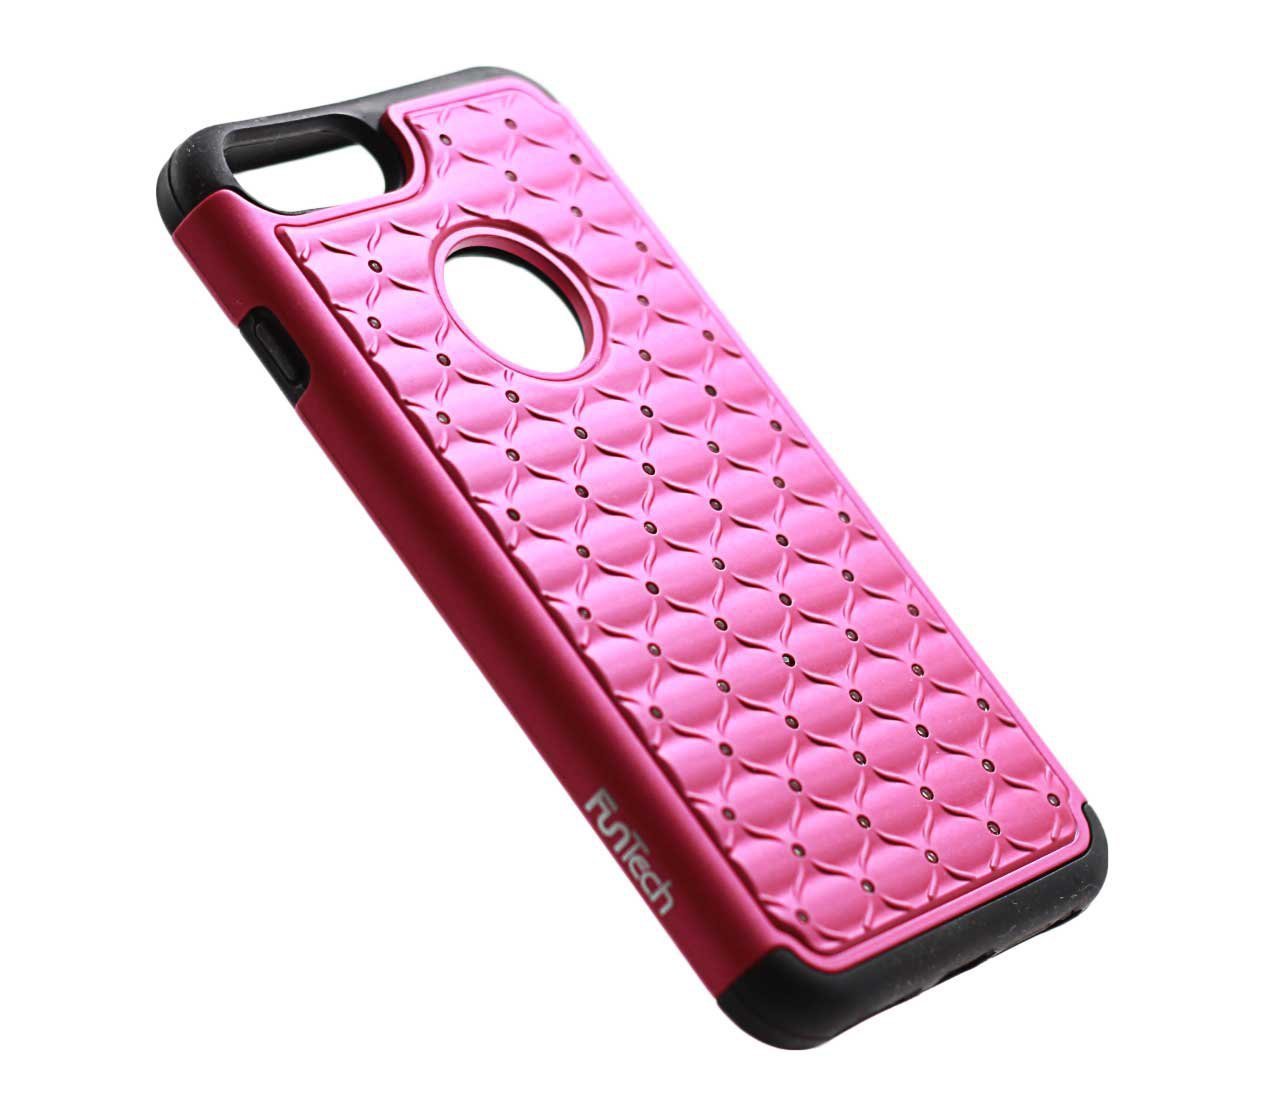 iphone 7/8 plus case diamond shockproof protective pink